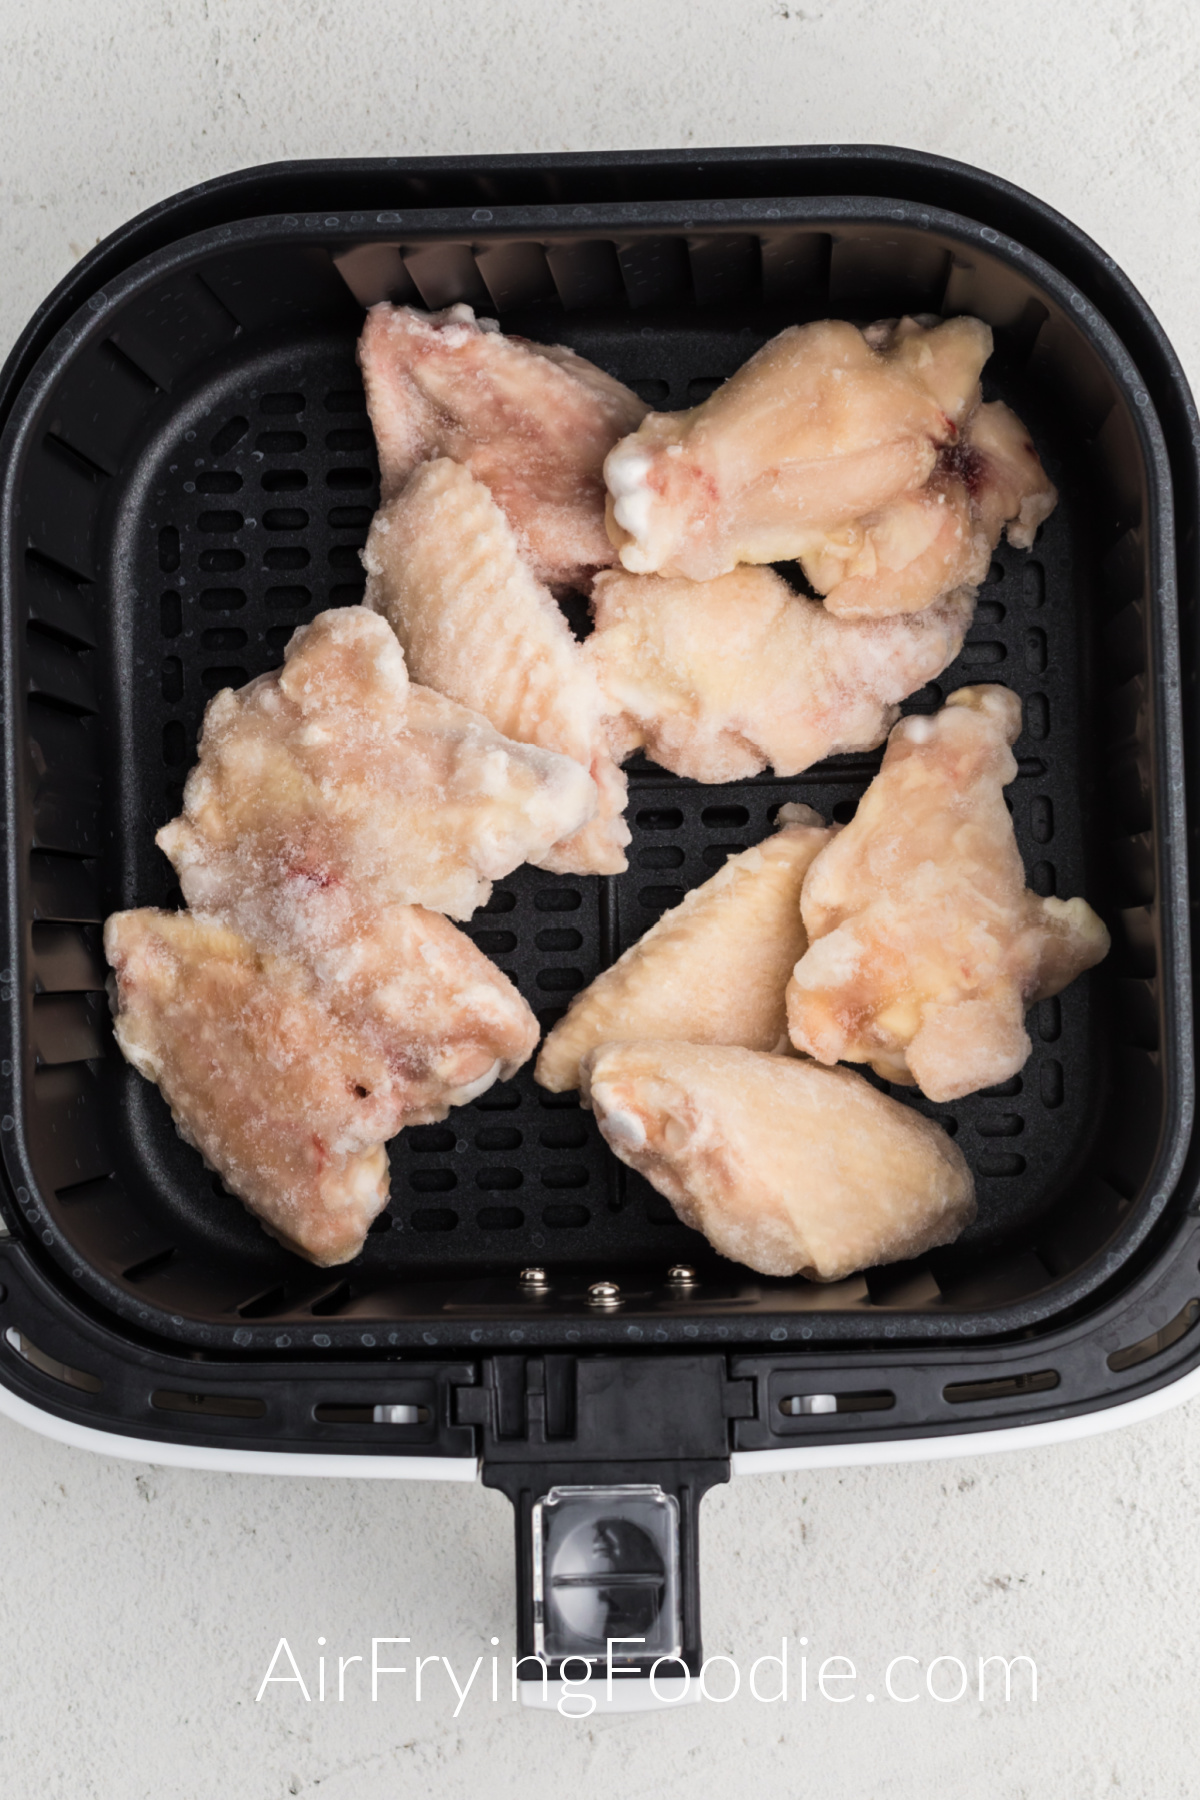 Frozen chicken wings in the basket of the air fryer.